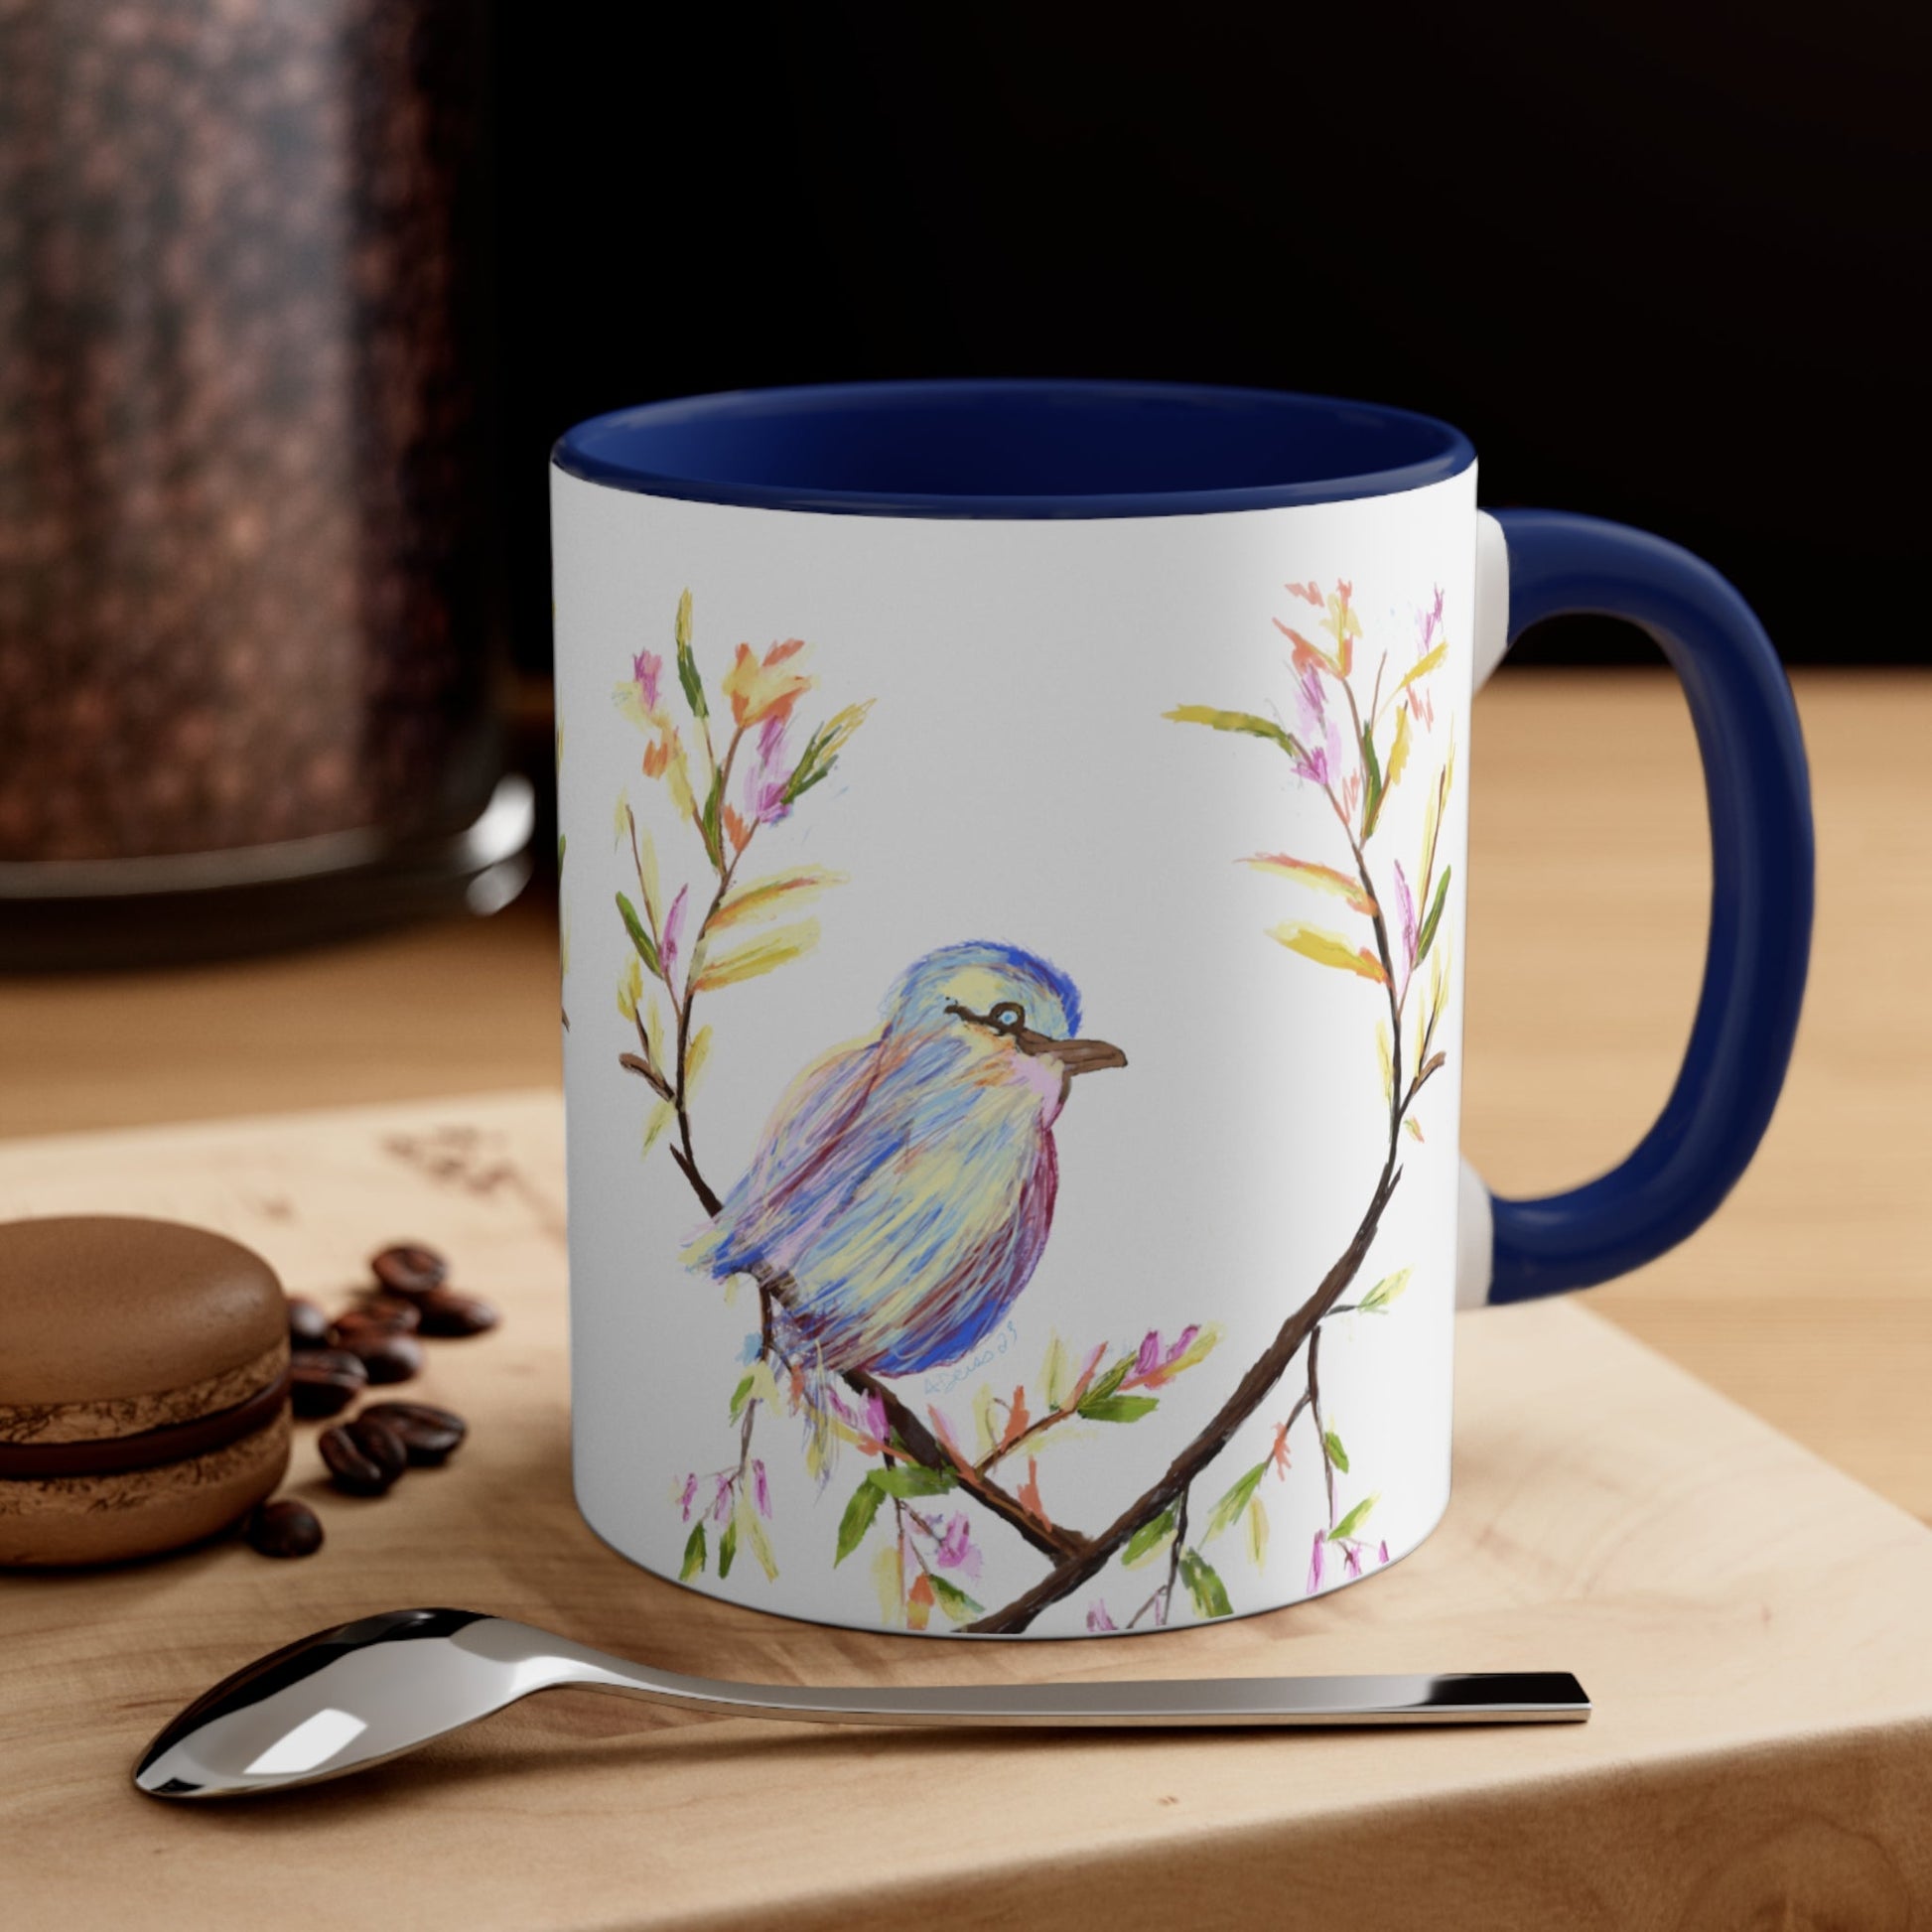 Watercolor Bird Accent Coffee Mug, 11oz - Blue Cava